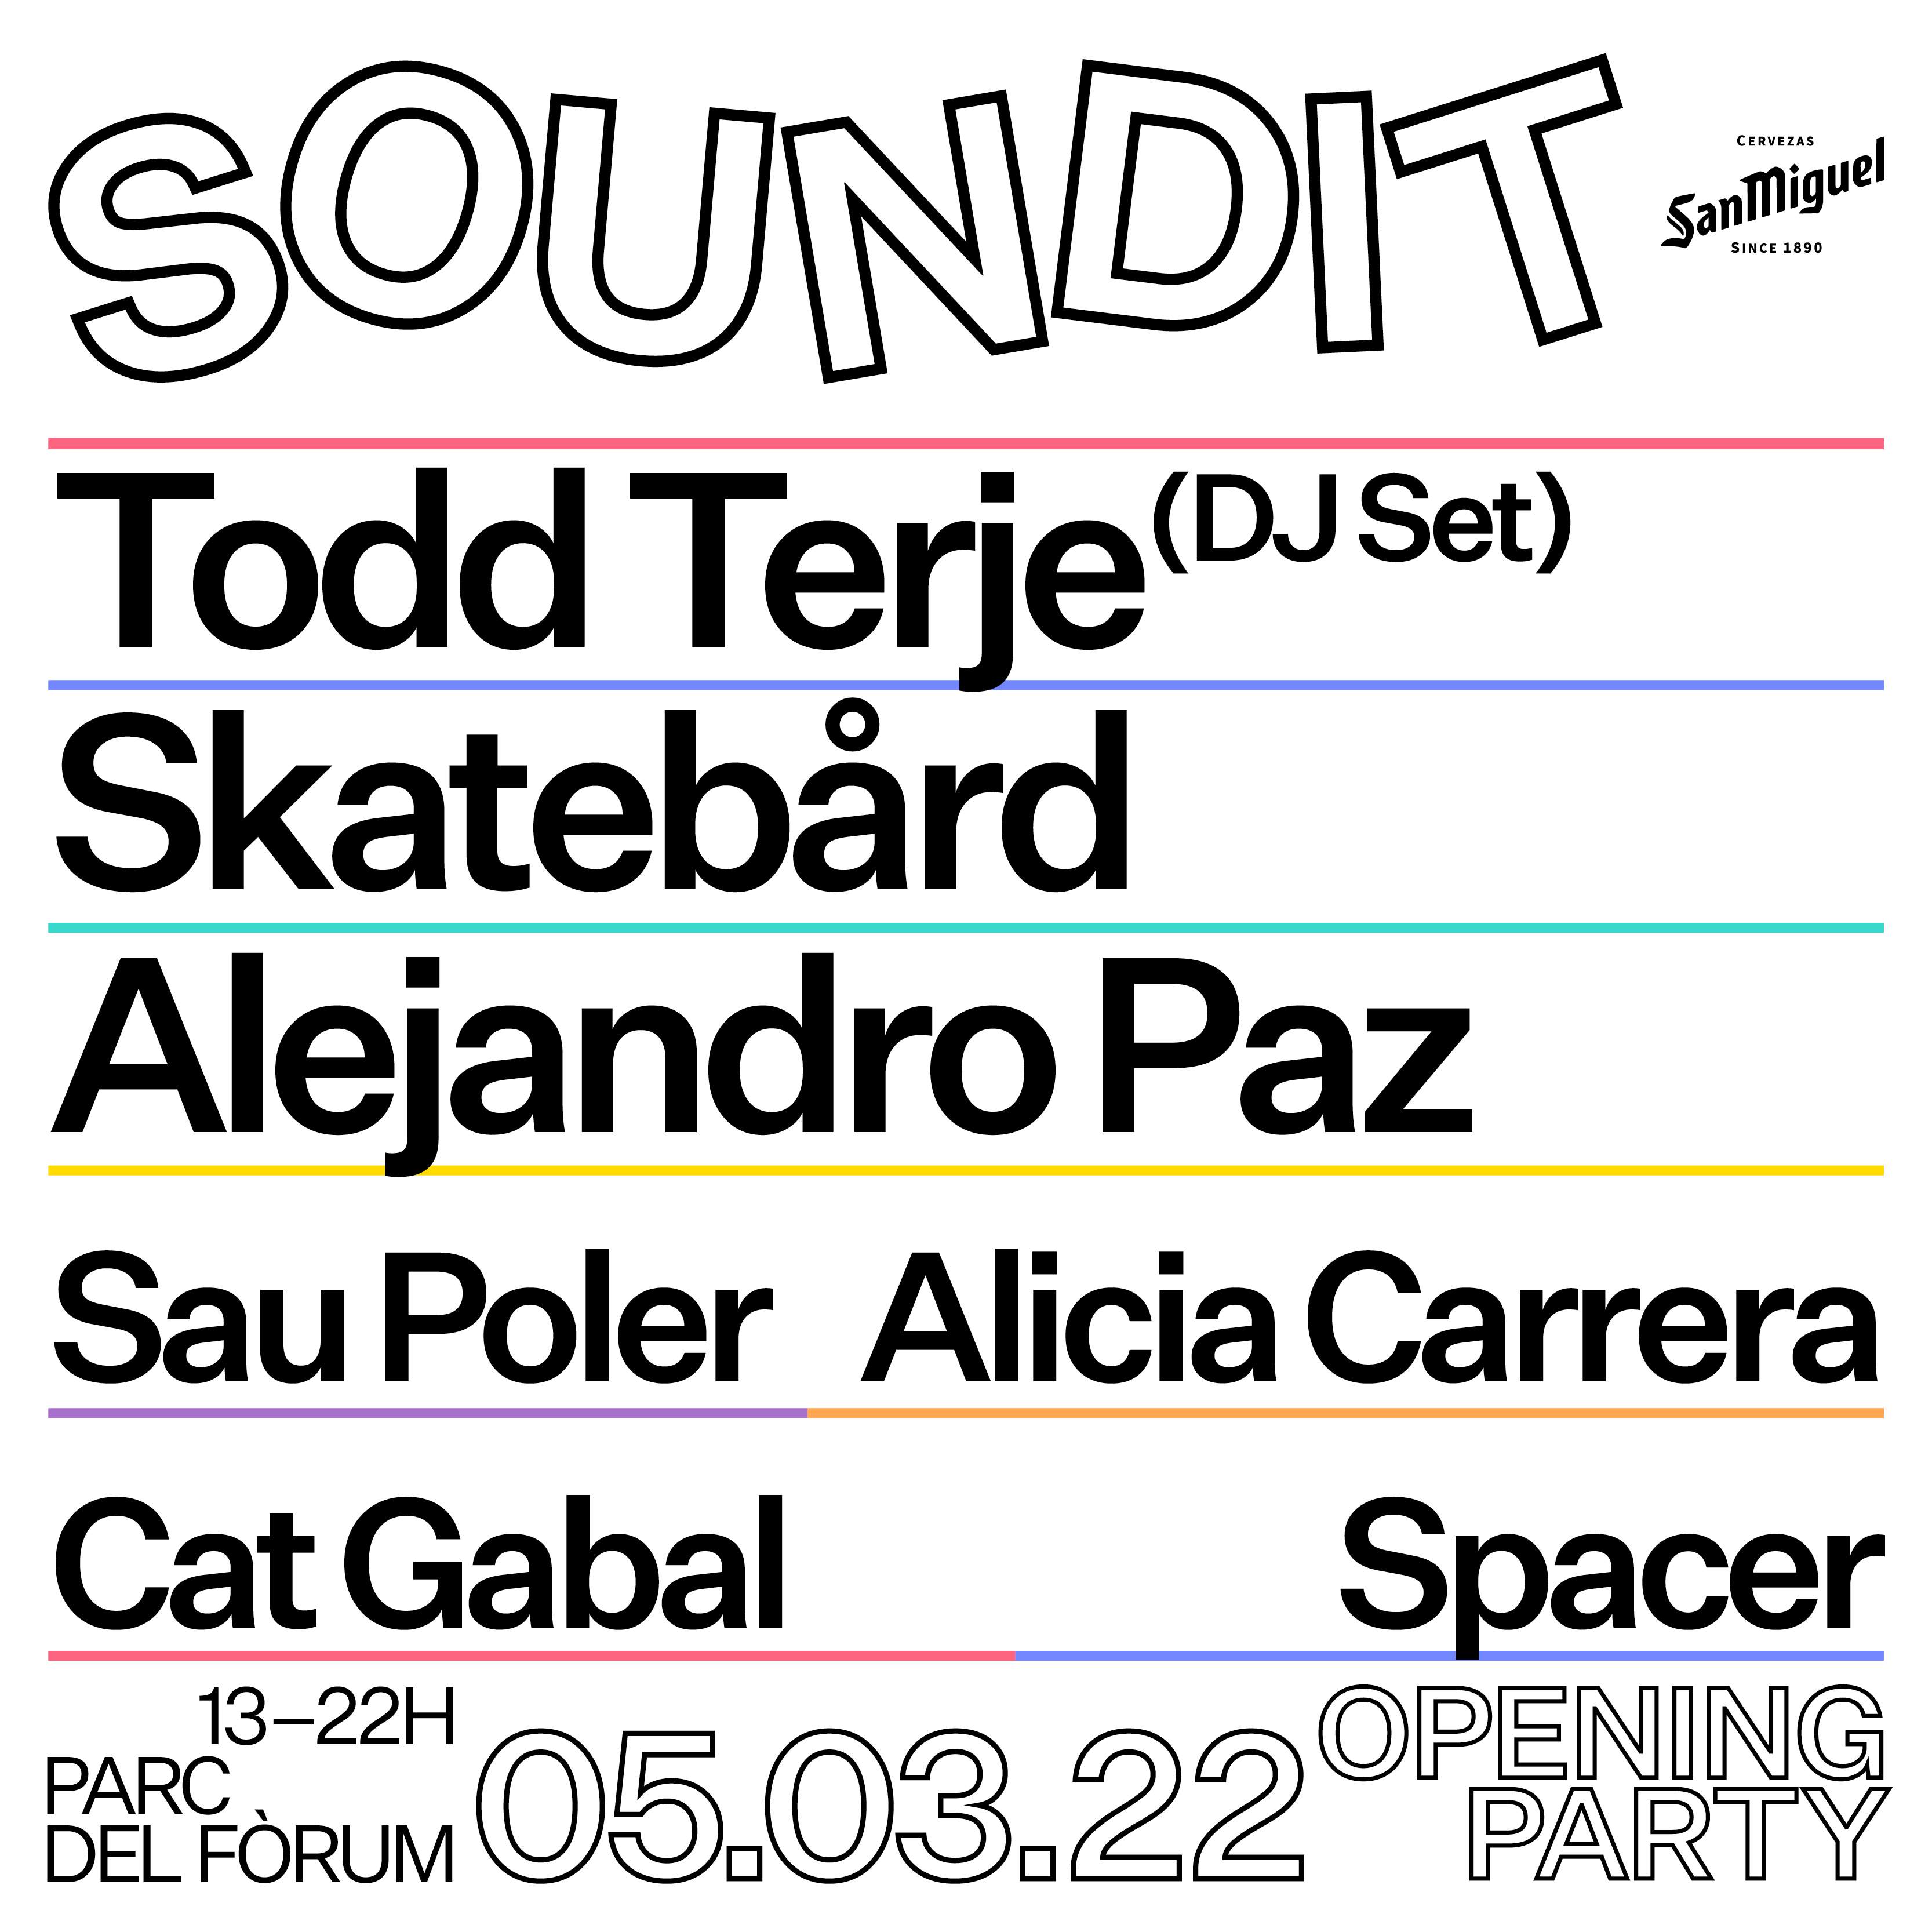 SOUNDIT Opening Party: Todd Terje (DJ set), Skatebård, Alejandro Paz, SPACER - Página frontal